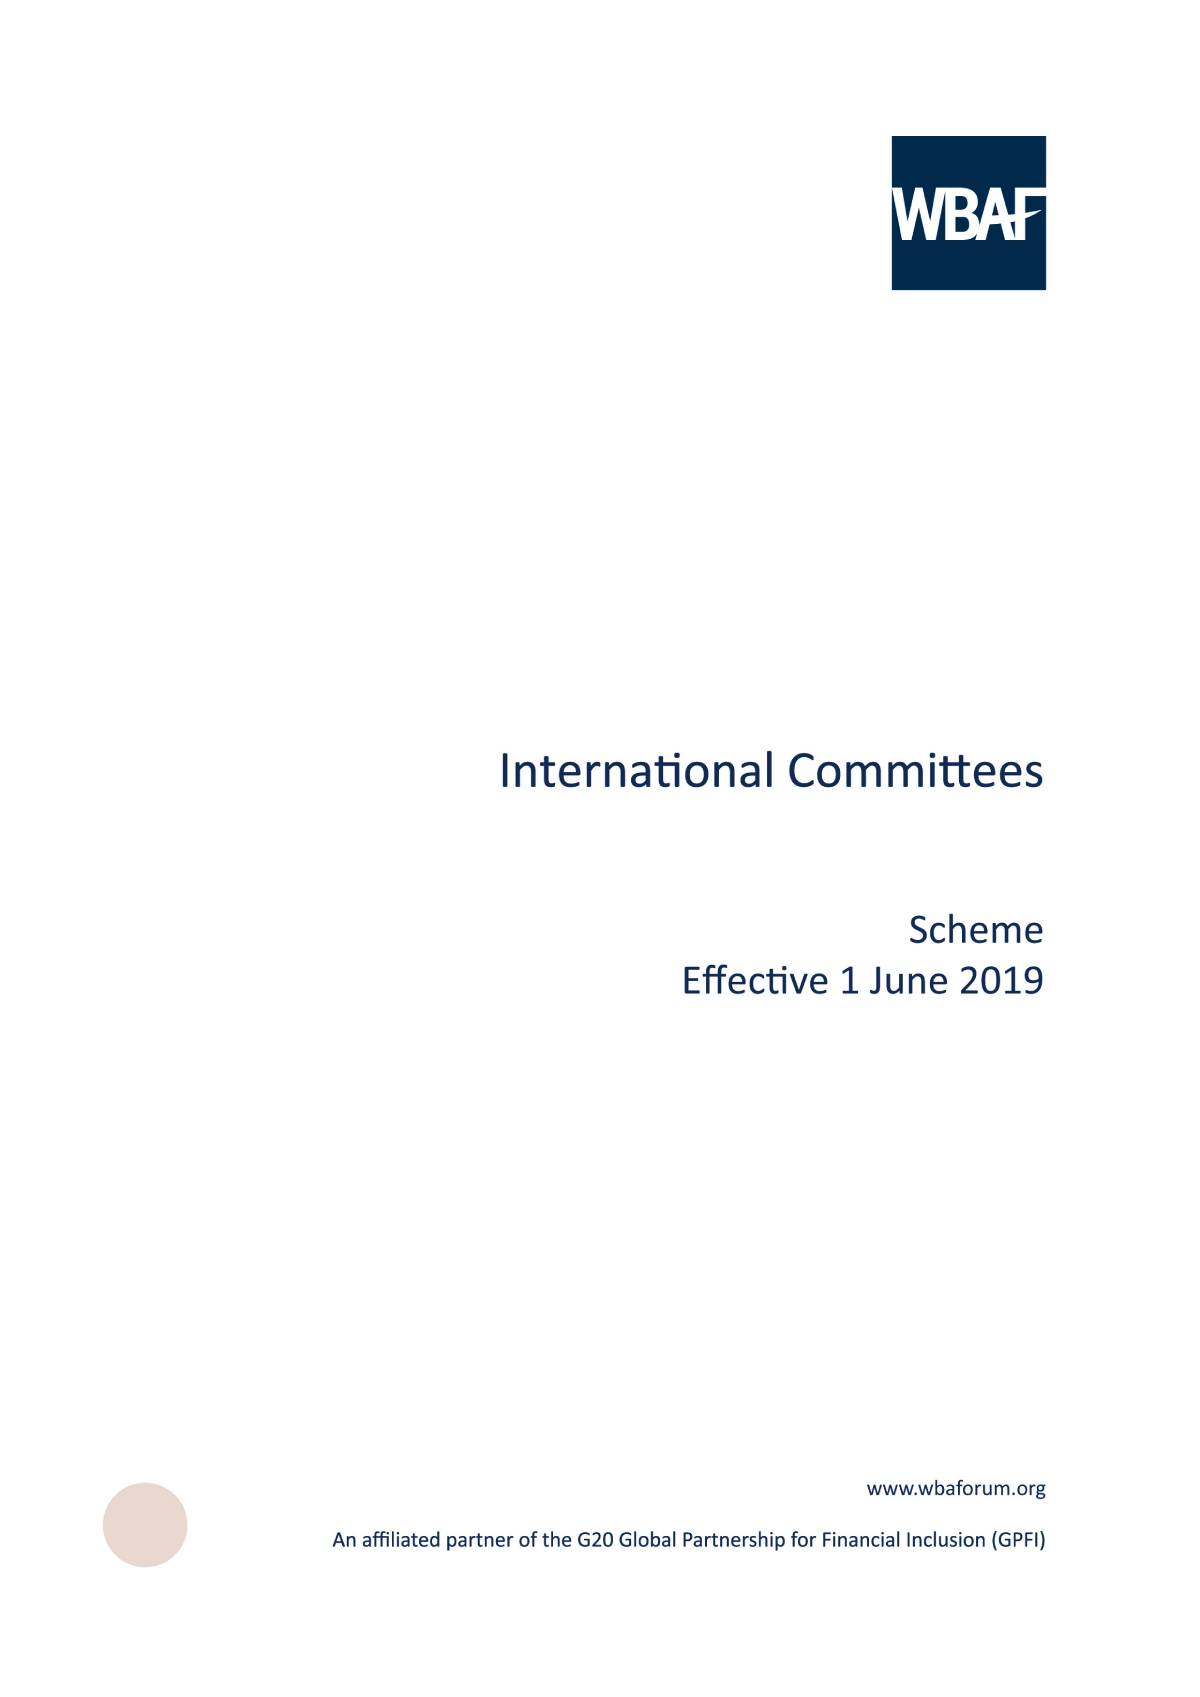 International Committees - Scheme